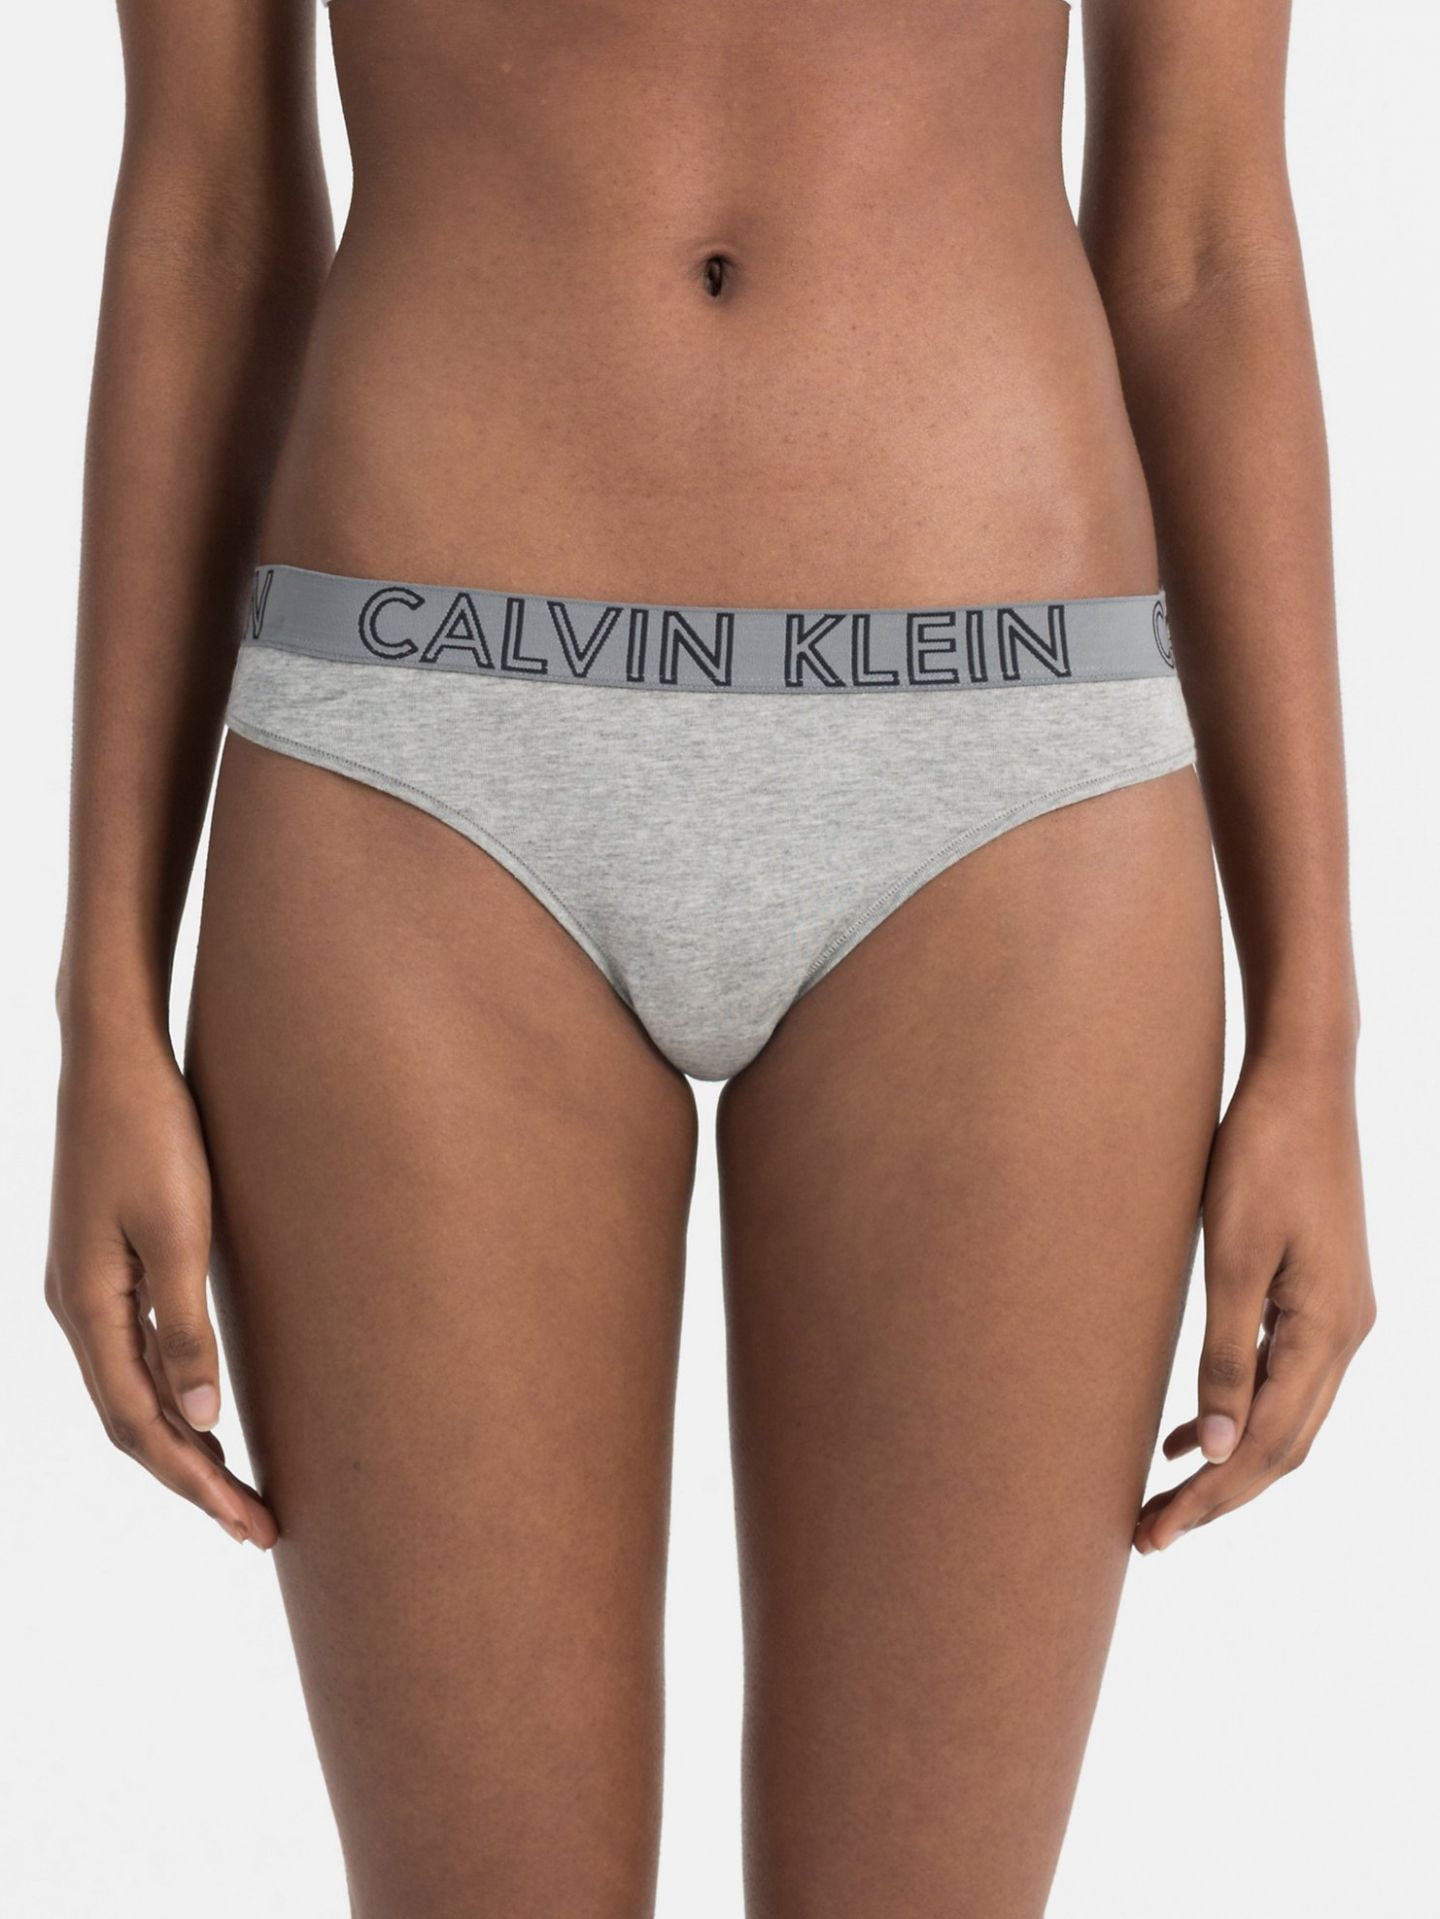 Calvin Klein Women's Ultimate Cotton Thong, Grey Heather, Medium